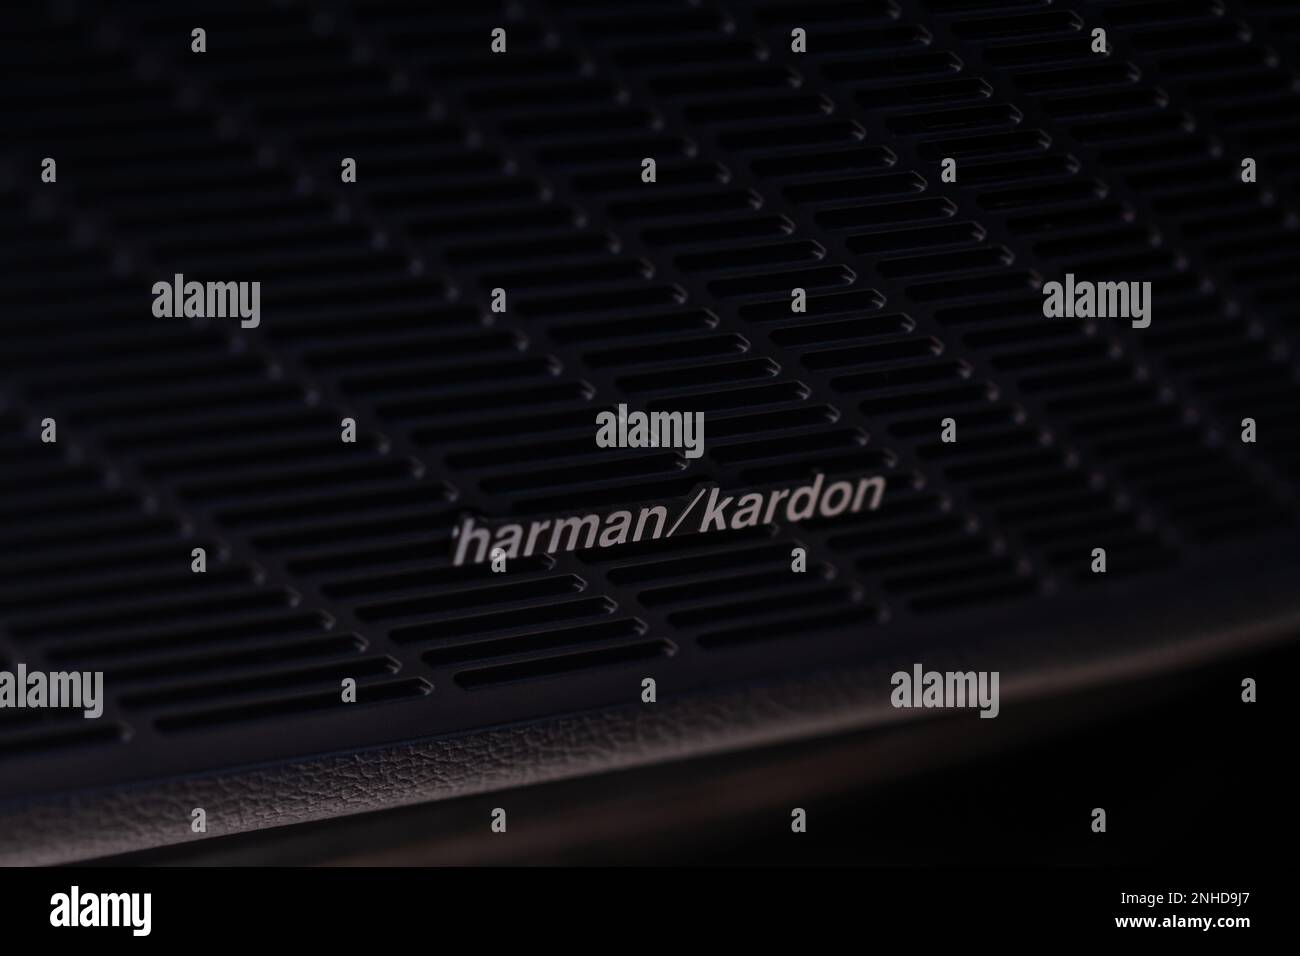 Nicknames for Harman: ☬☠️HสℜMͯ₳₦☠☬, ꧁༒ℍ𝔸ℝ𝕄𝔸ℕ༒꧂, ꧁༒☆☬HสℜMͯ₳₦☬☆ ༒꧂,  ༄ⒽⒶⓇⓂⒶⓃ࿐, ☆Harͥᴍaͣnͫ☆